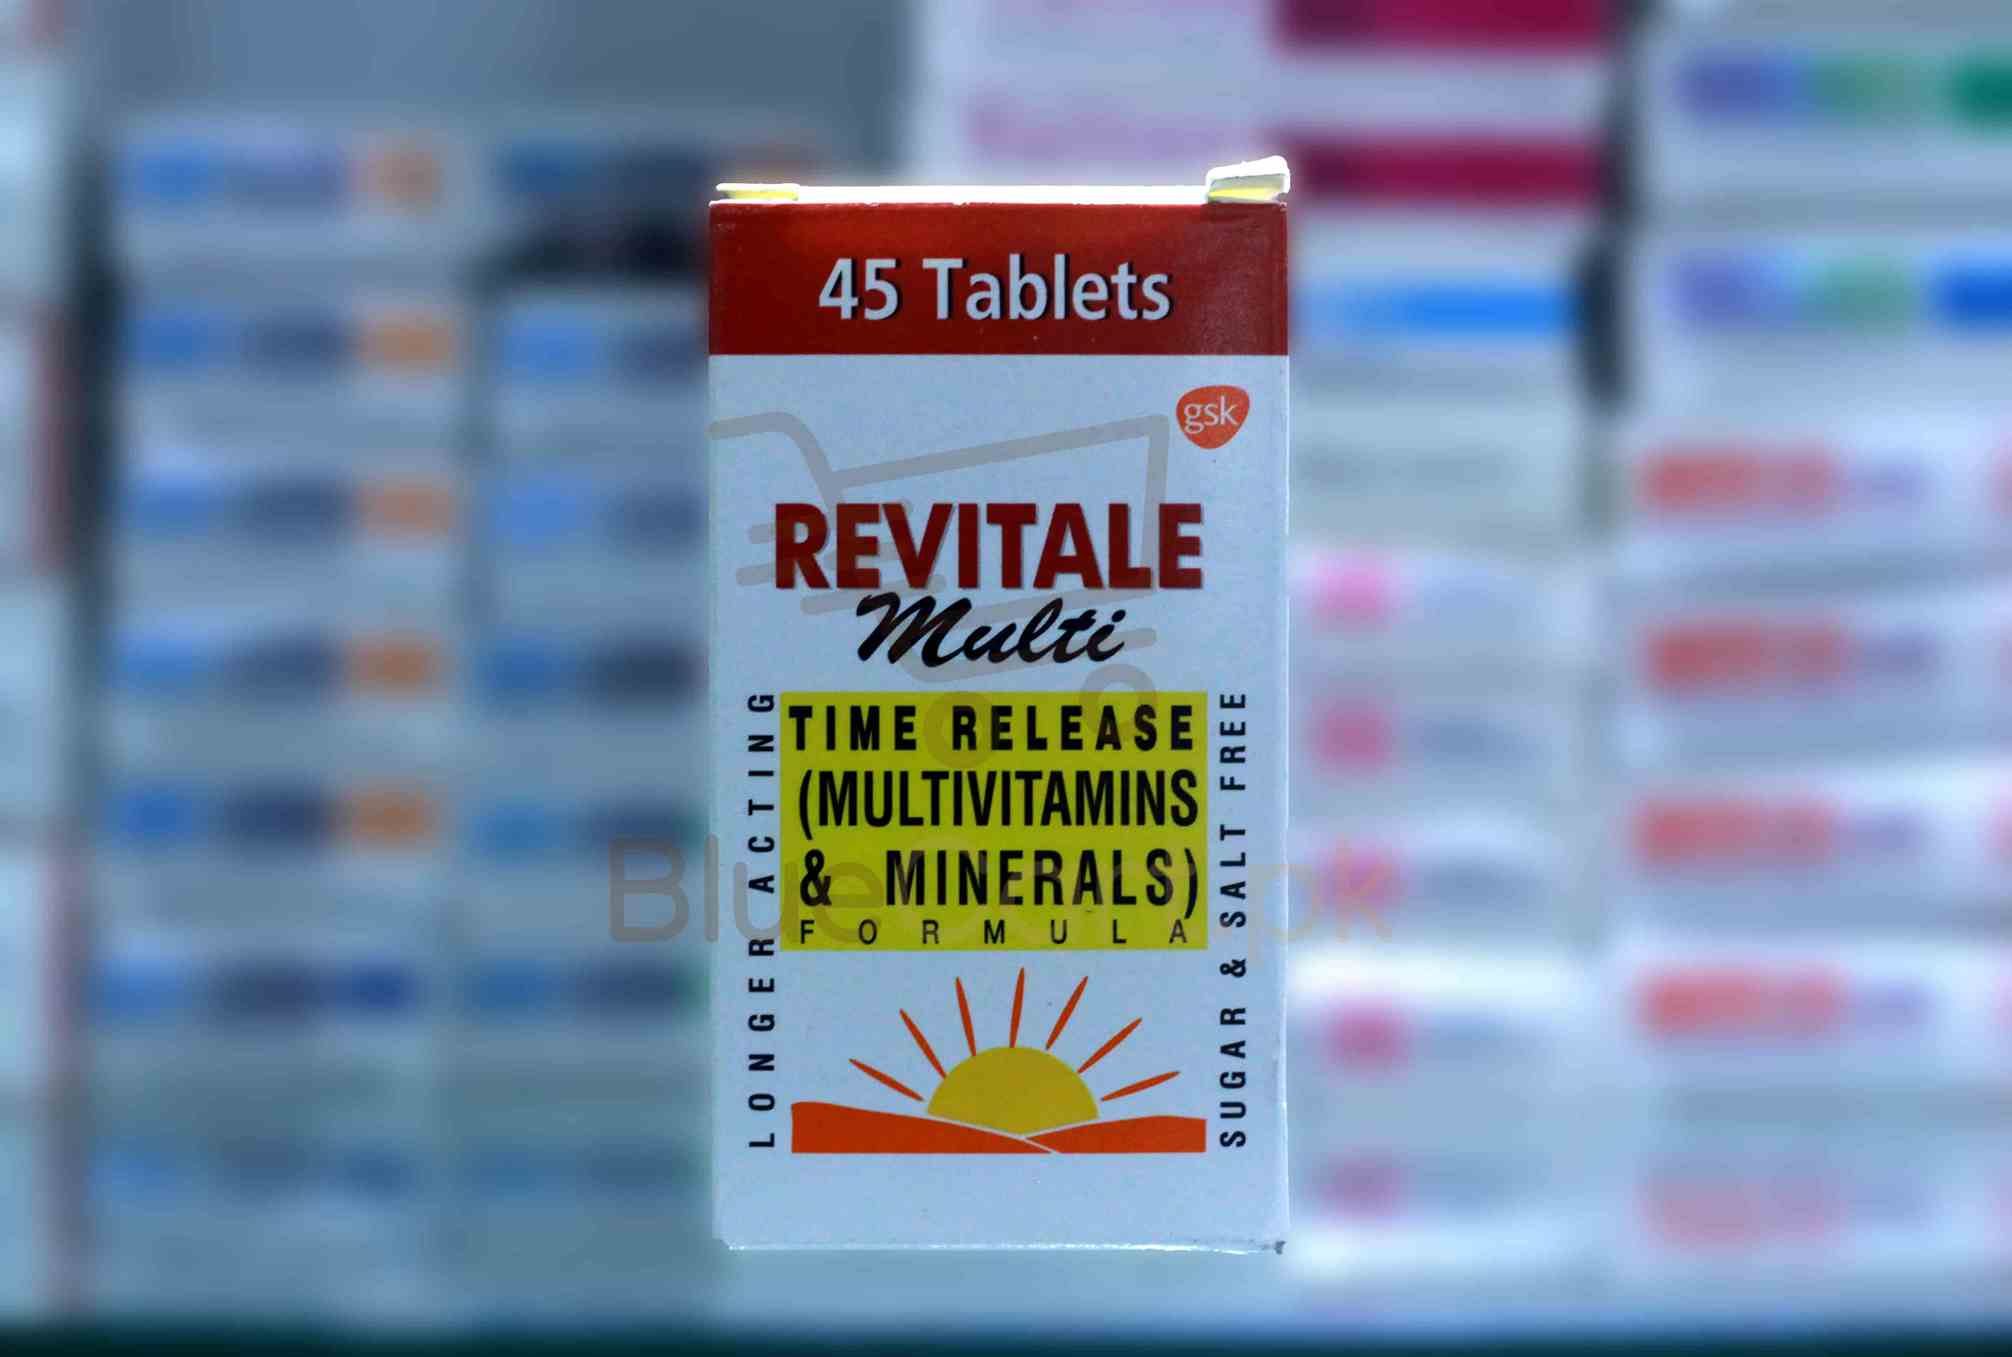 Revitale Multi Tablet